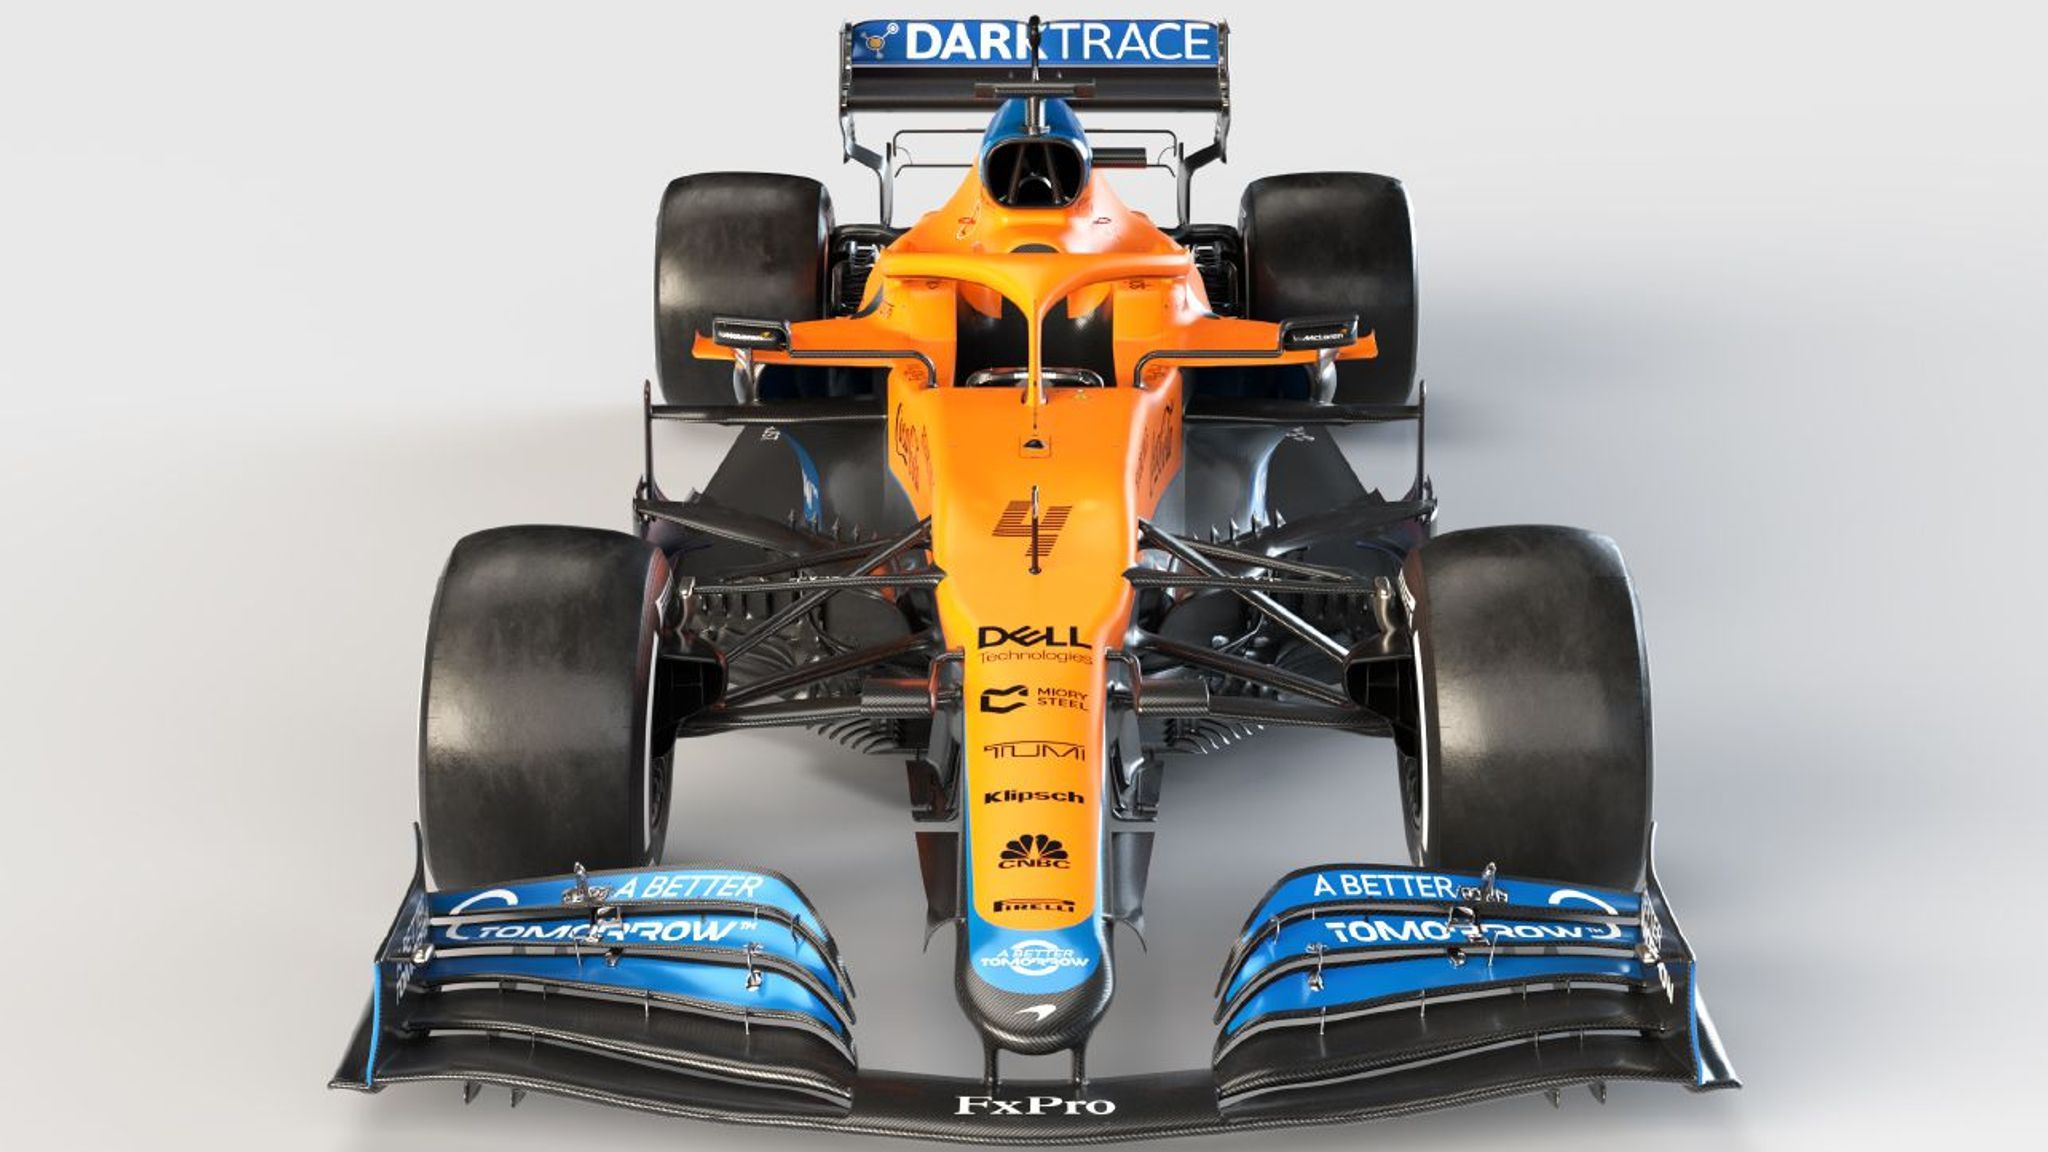 McLaren reveal first look at 2021 Formula 1 car as Daniel Ricciardo makes official team debut